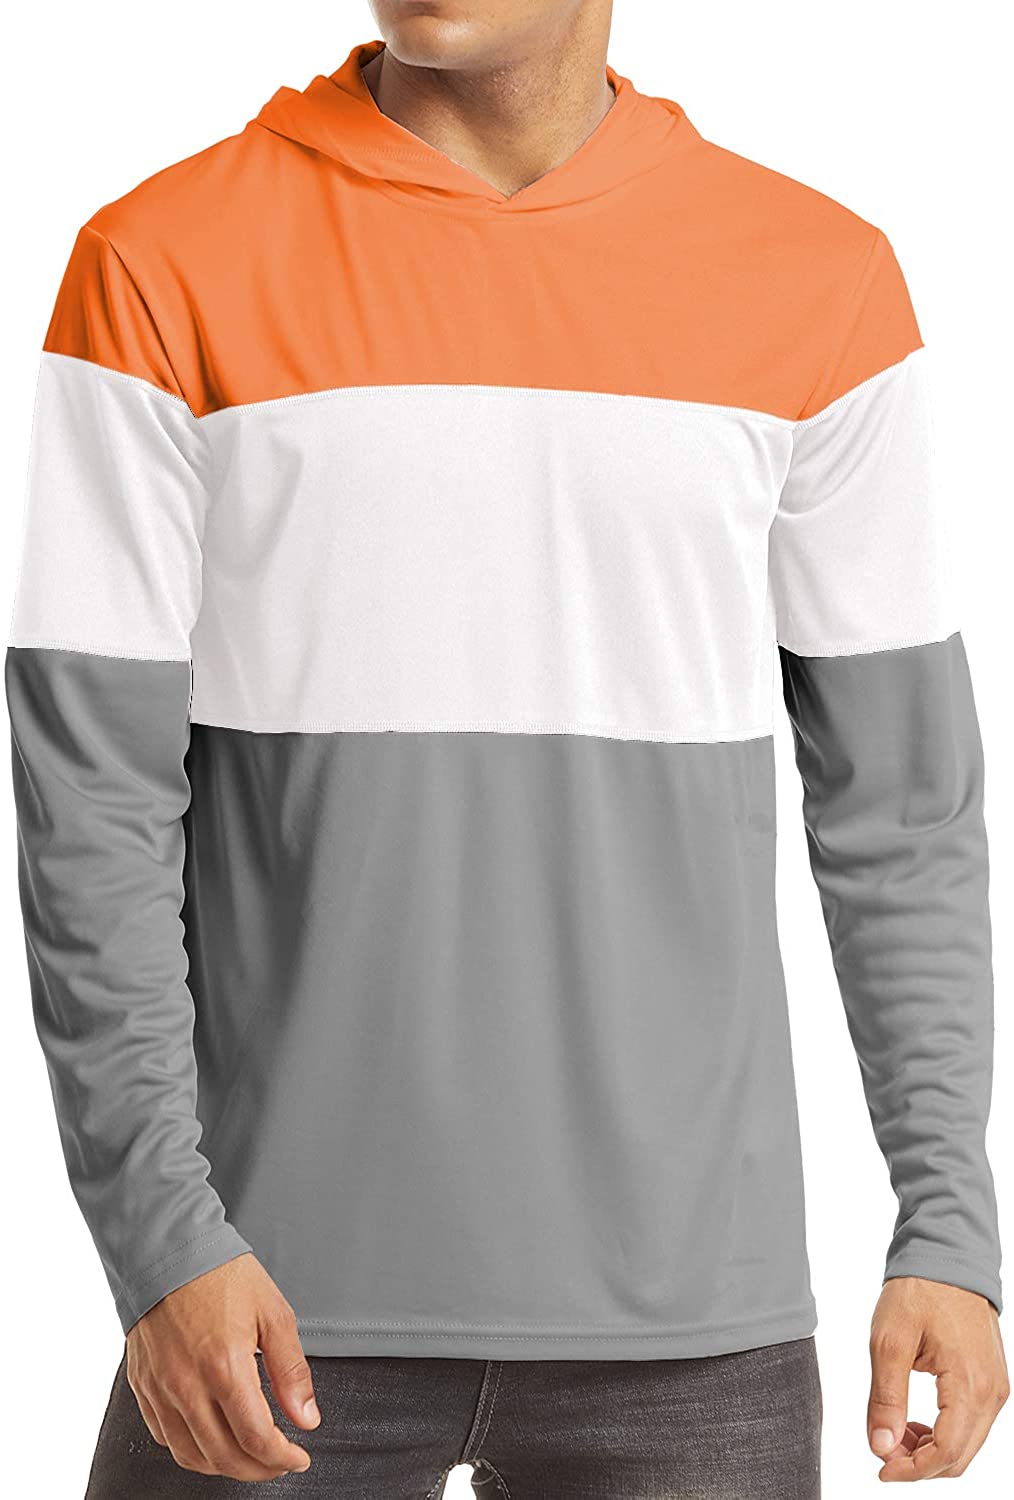 FASKUNOIE Men's Sweatshirts UPF 50+ Sun Protection Long Sleeve Casual  Outdoor Ho